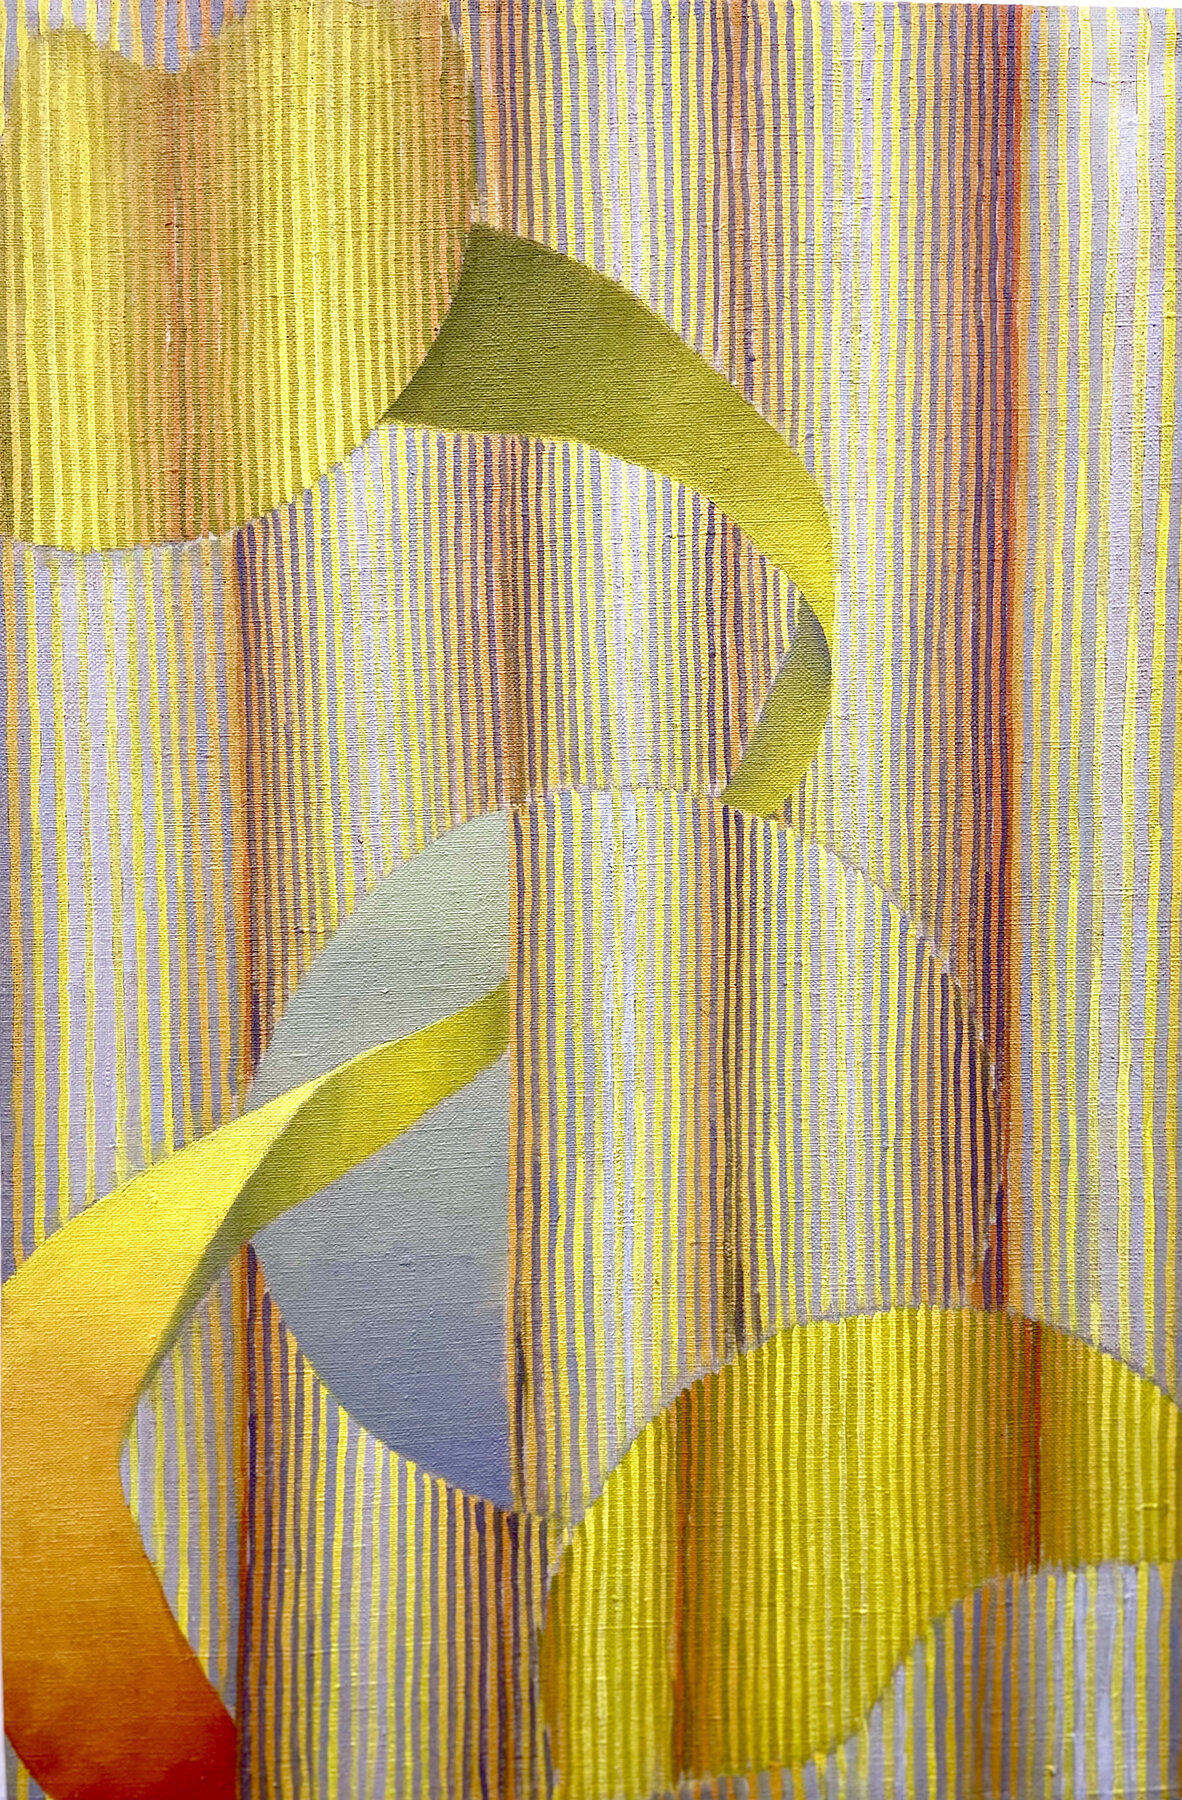 THERESA DADDEZIO | Weaving Rays, 18 x 12 inches / 45.7 x 30.4 cm, oil on linen, 2019